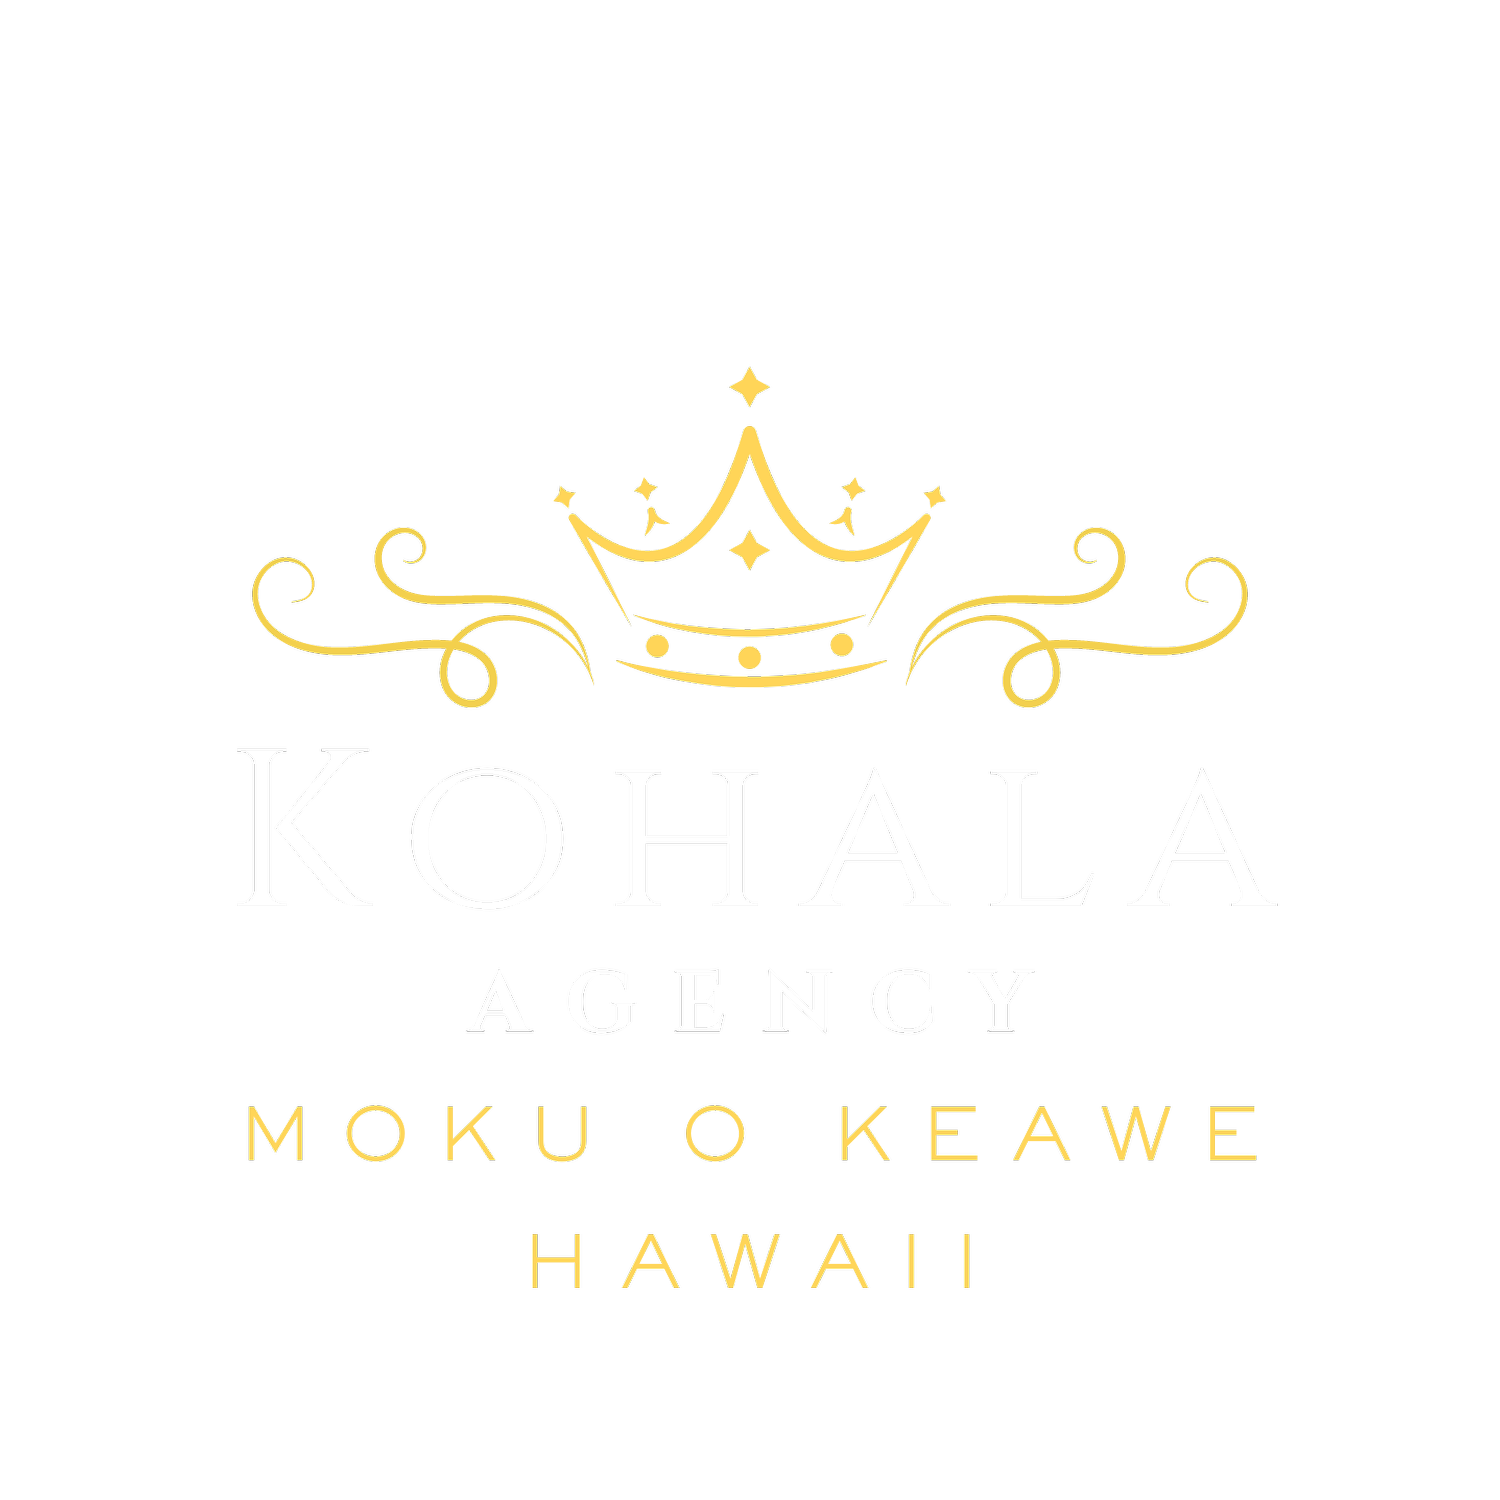 The Kohala Agency